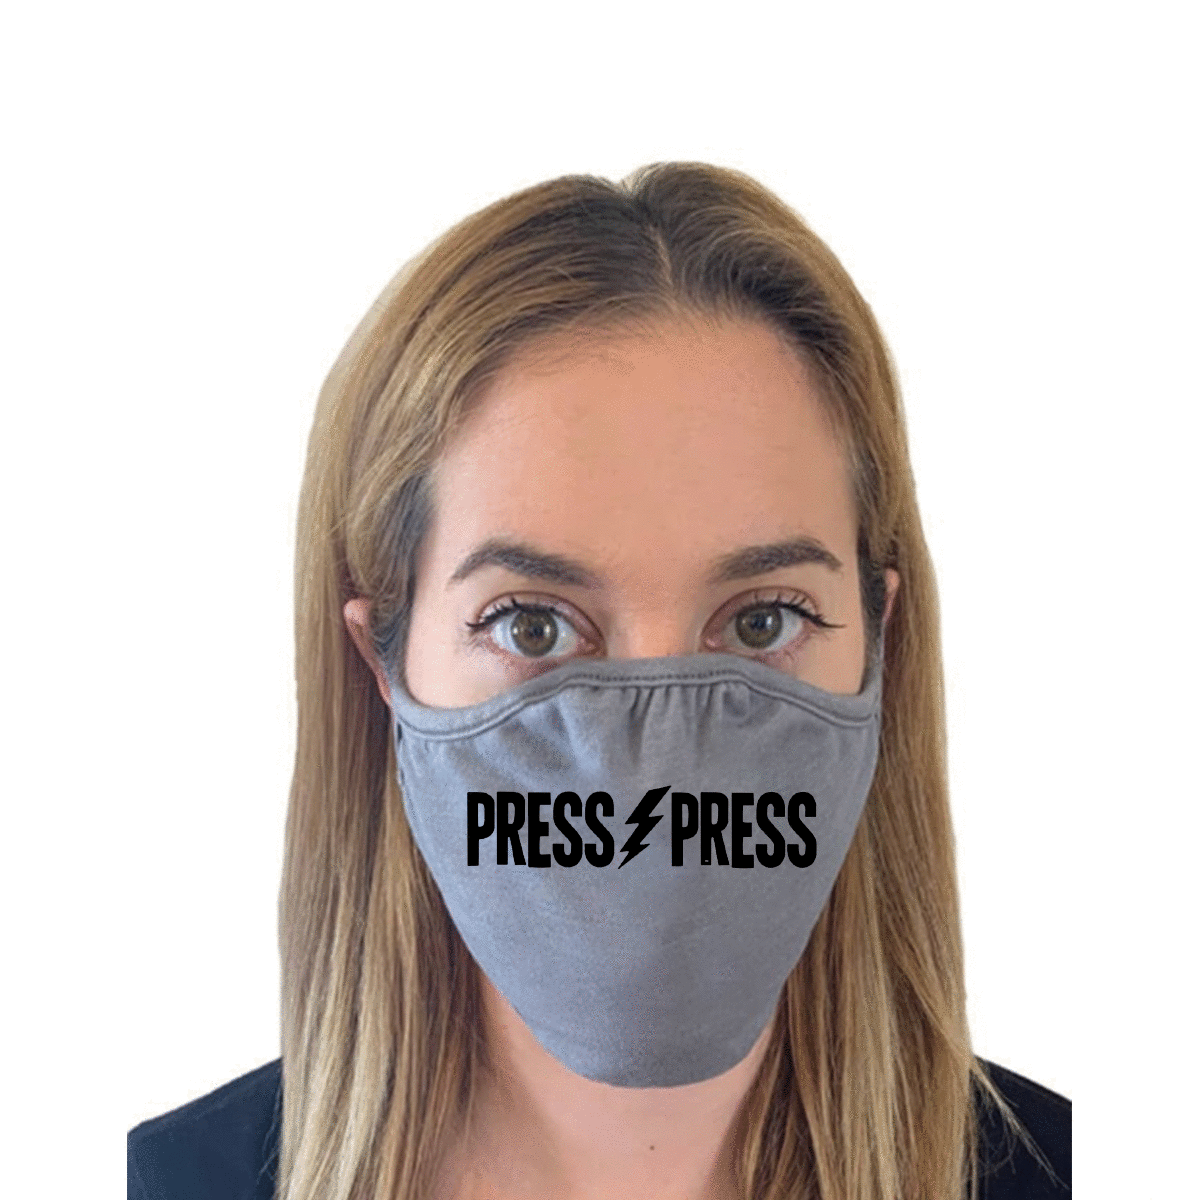 Press Press Merch - Virginia - Custom Face Mask - Coffee Shop and Roaster Logo printed on a face mask - 1 color black logo printed on gray face covering